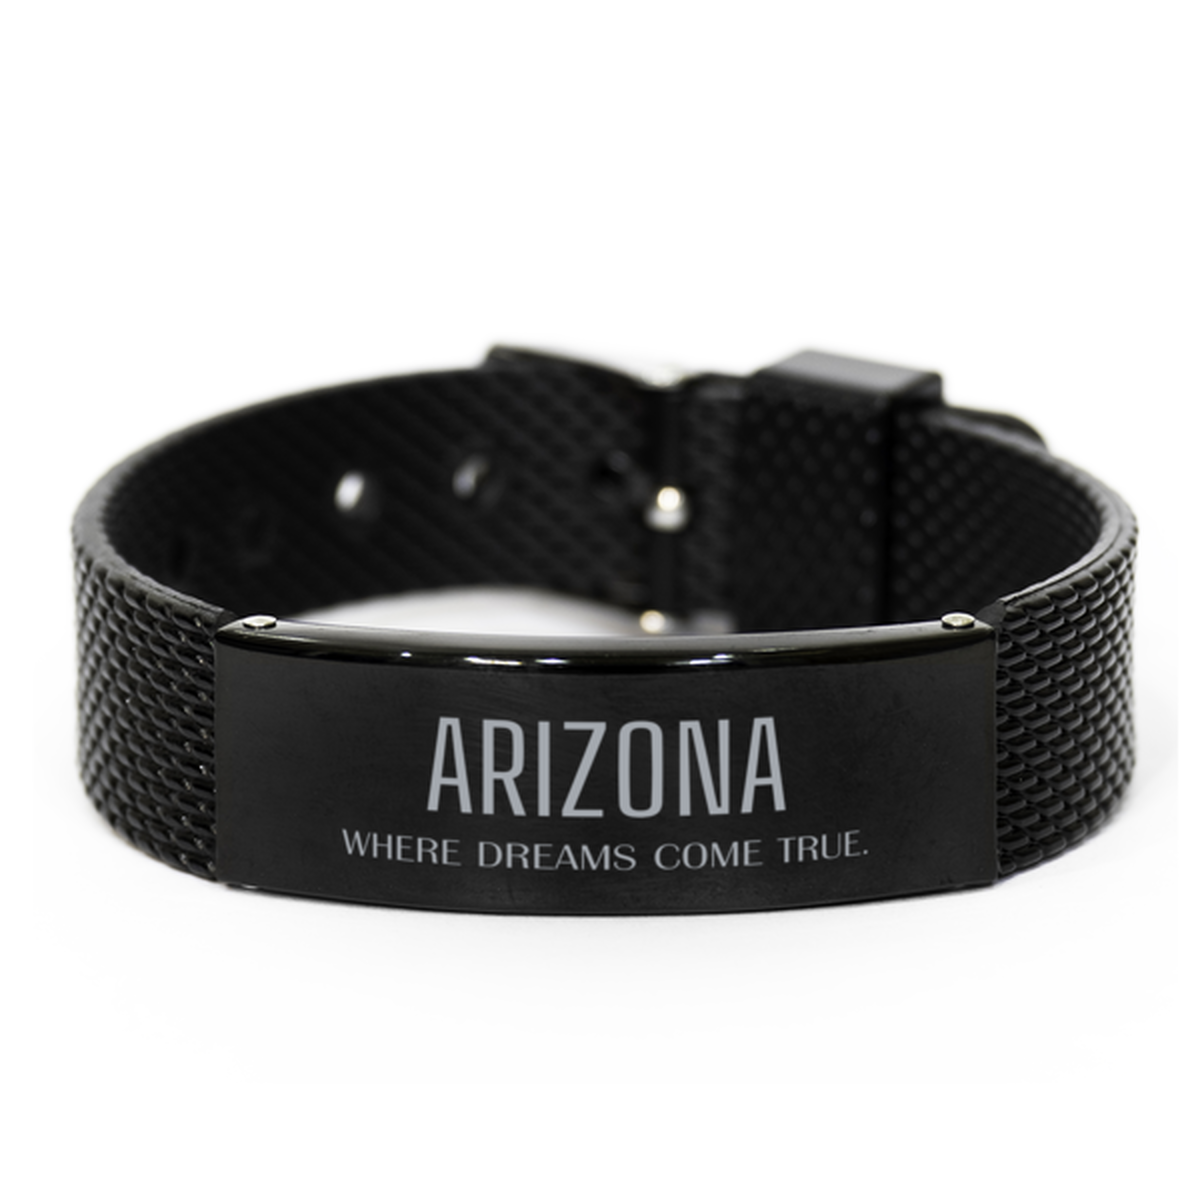 Love Arizona State Black Shark Mesh Bracelet, Arizona Where dreams come true, Birthday Inspirational Gifts For Arizona Men, Women, Friends